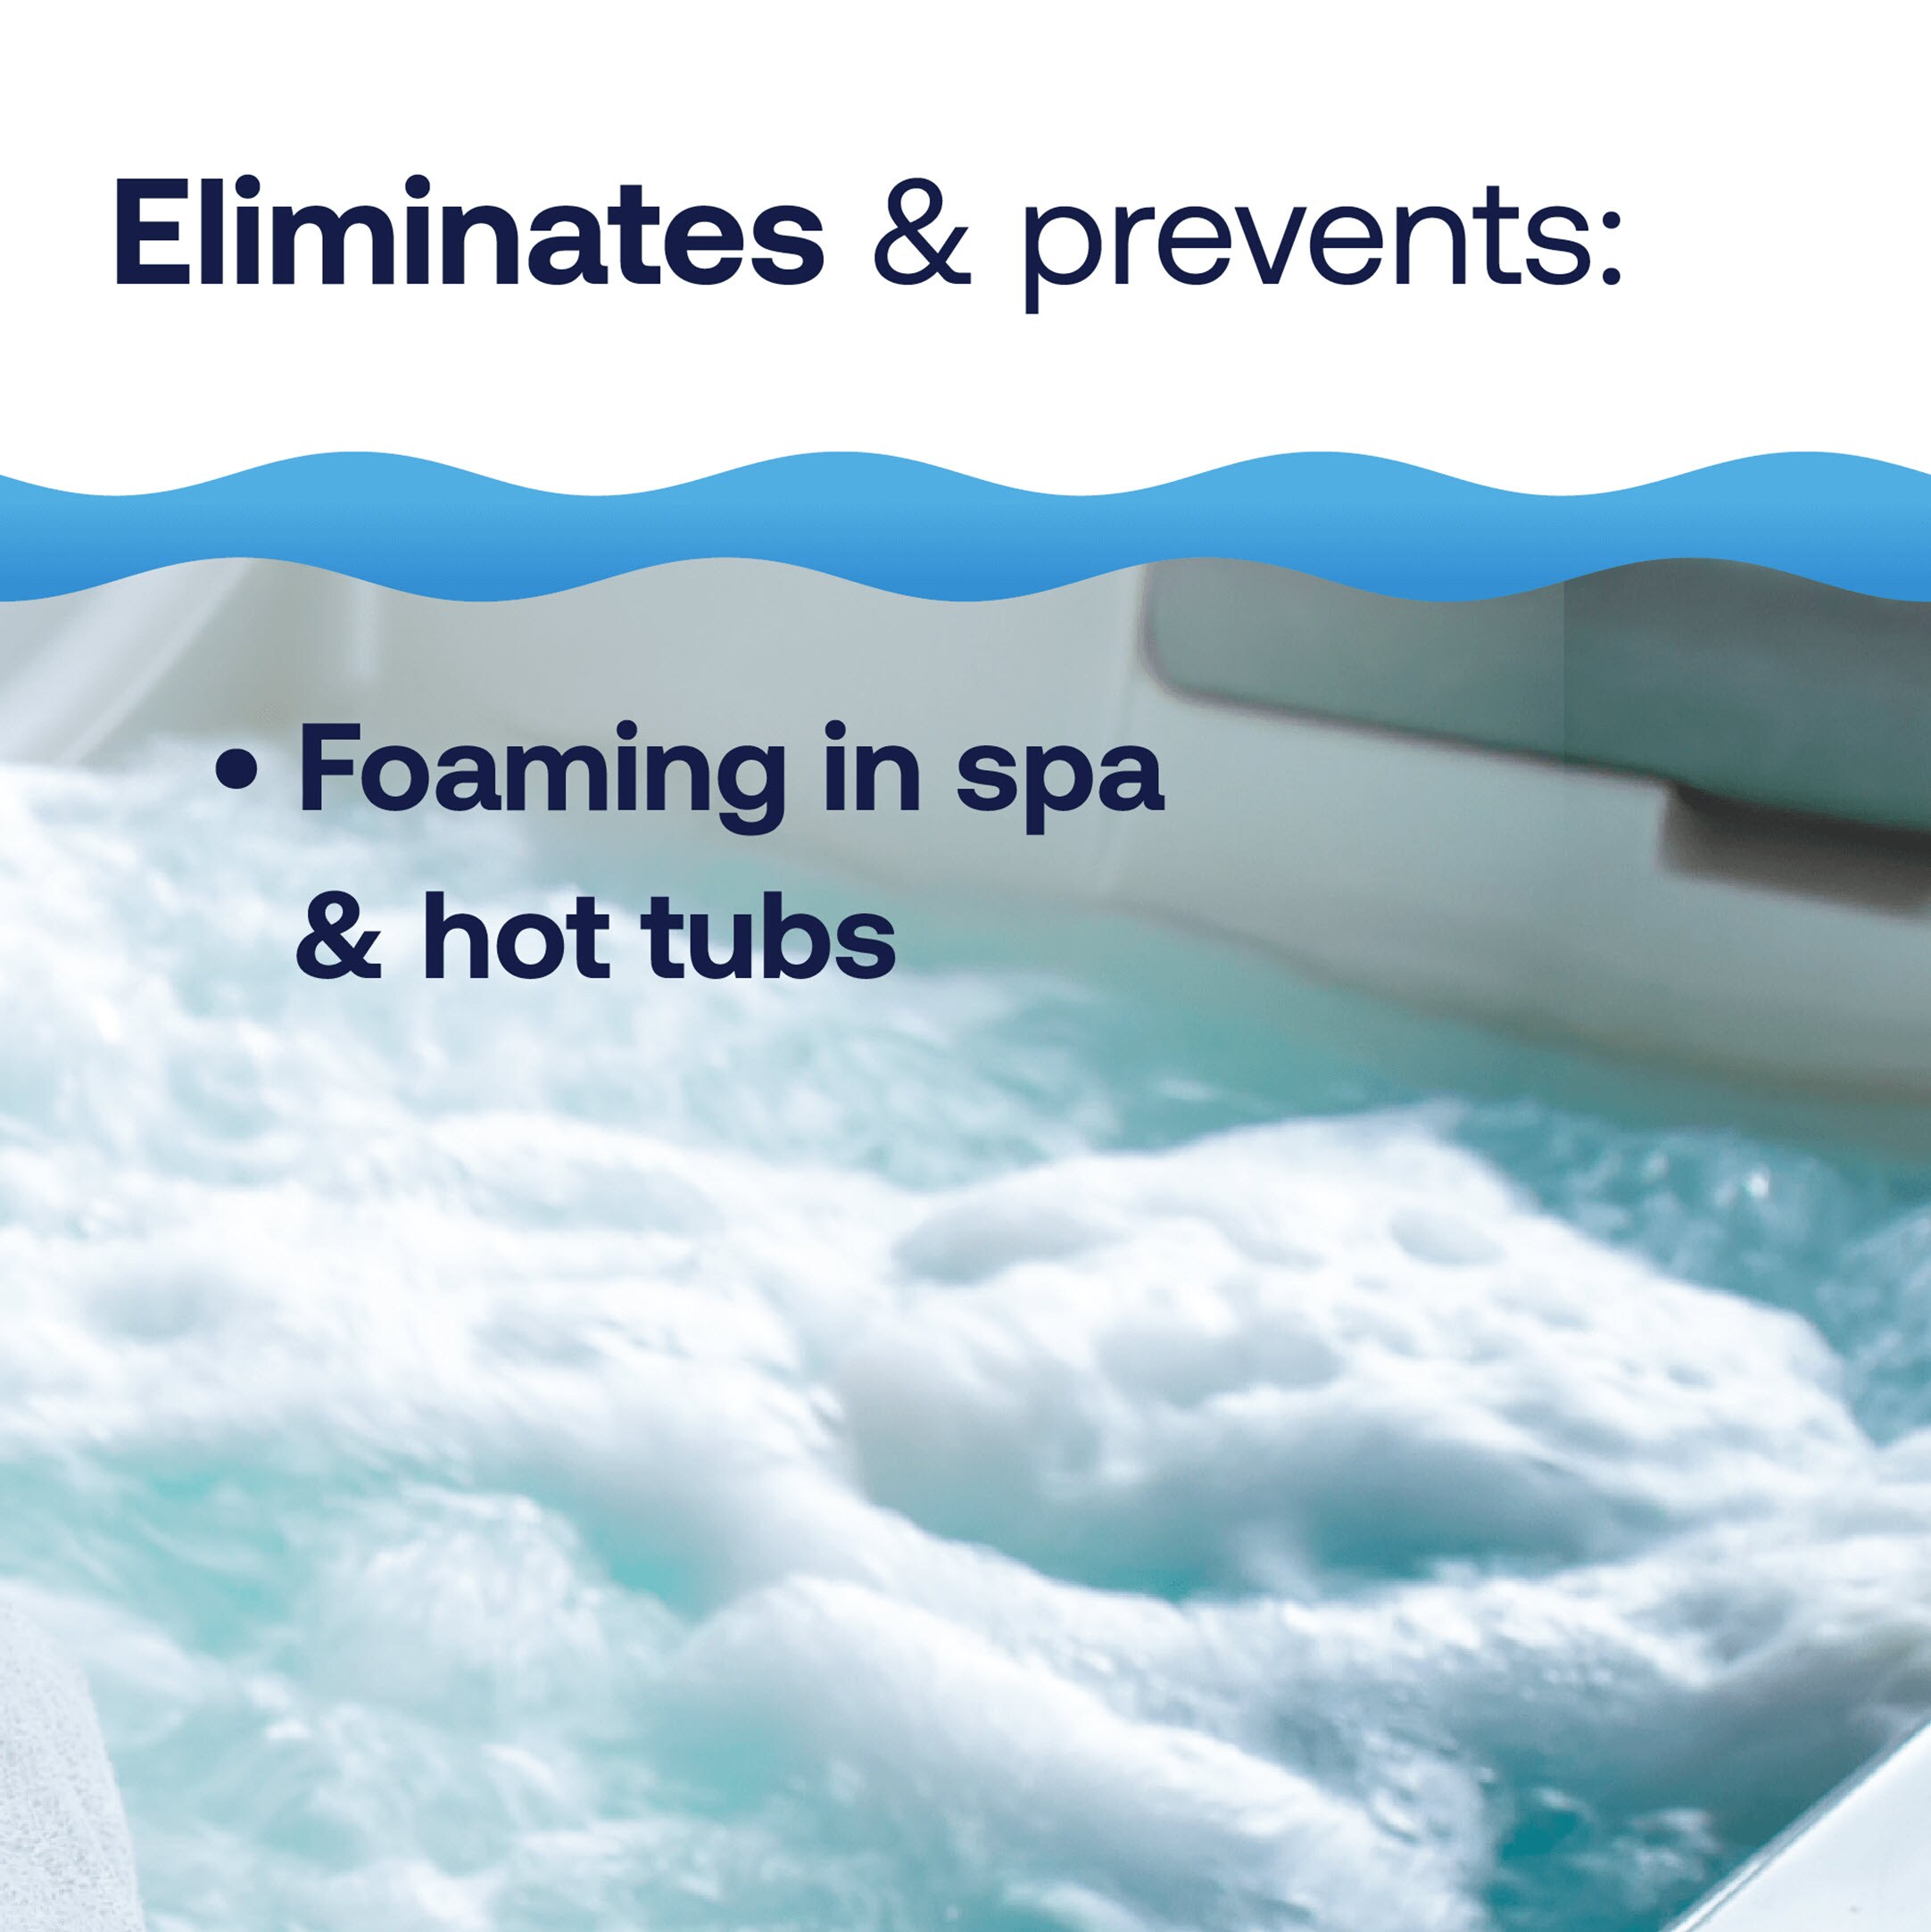 HTH Spa Care Filter Cleaner for Spas & Hot Tubs, 16oz (Pool Chemicals)